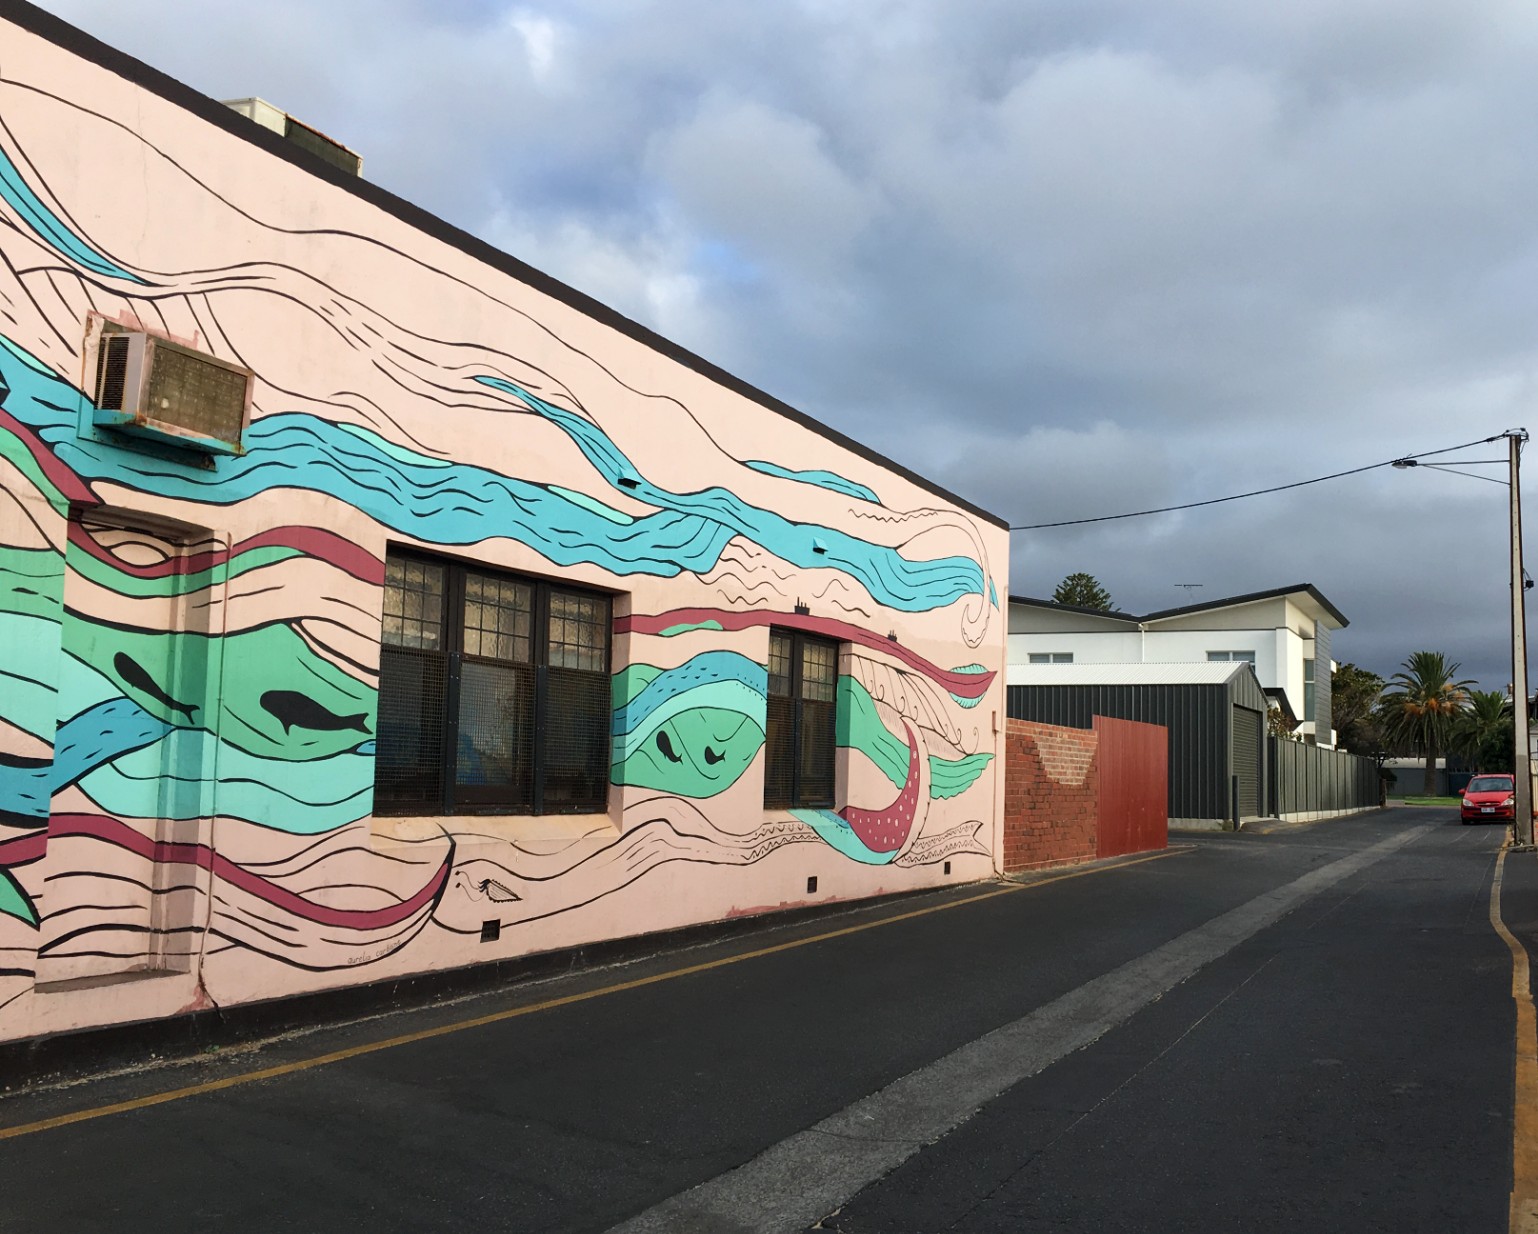 Colourful mural on building in alleyway